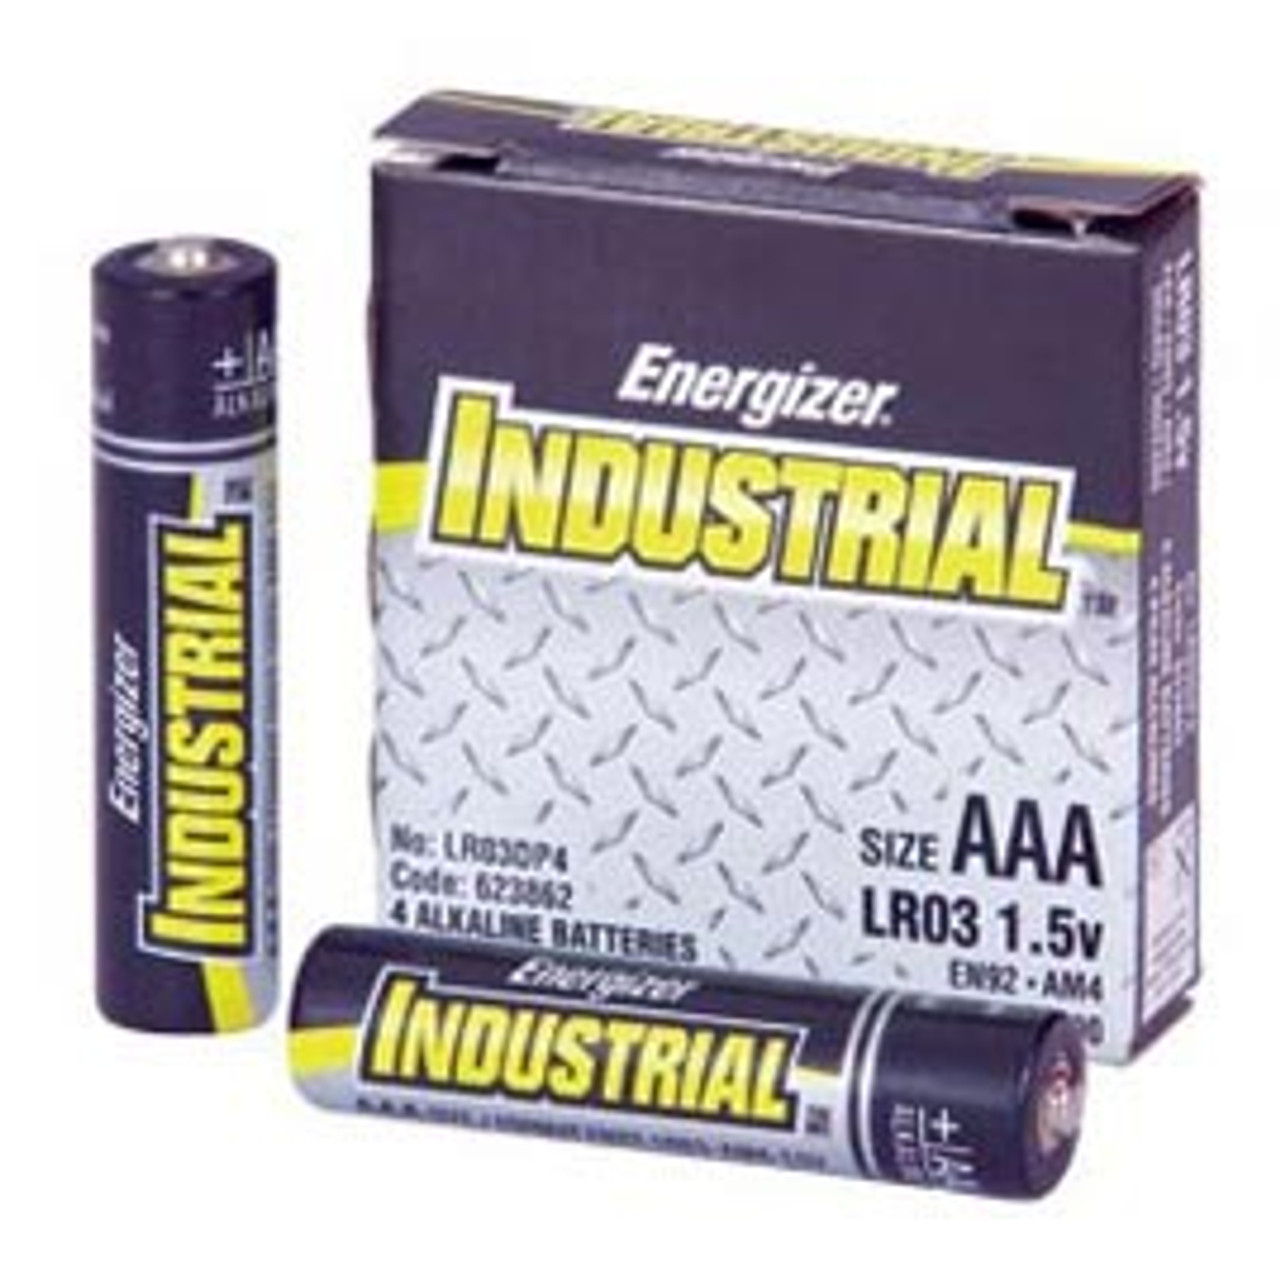 Energizer EN92 1.5 Volt AAA Size Industrial Alkaline Battery, 24